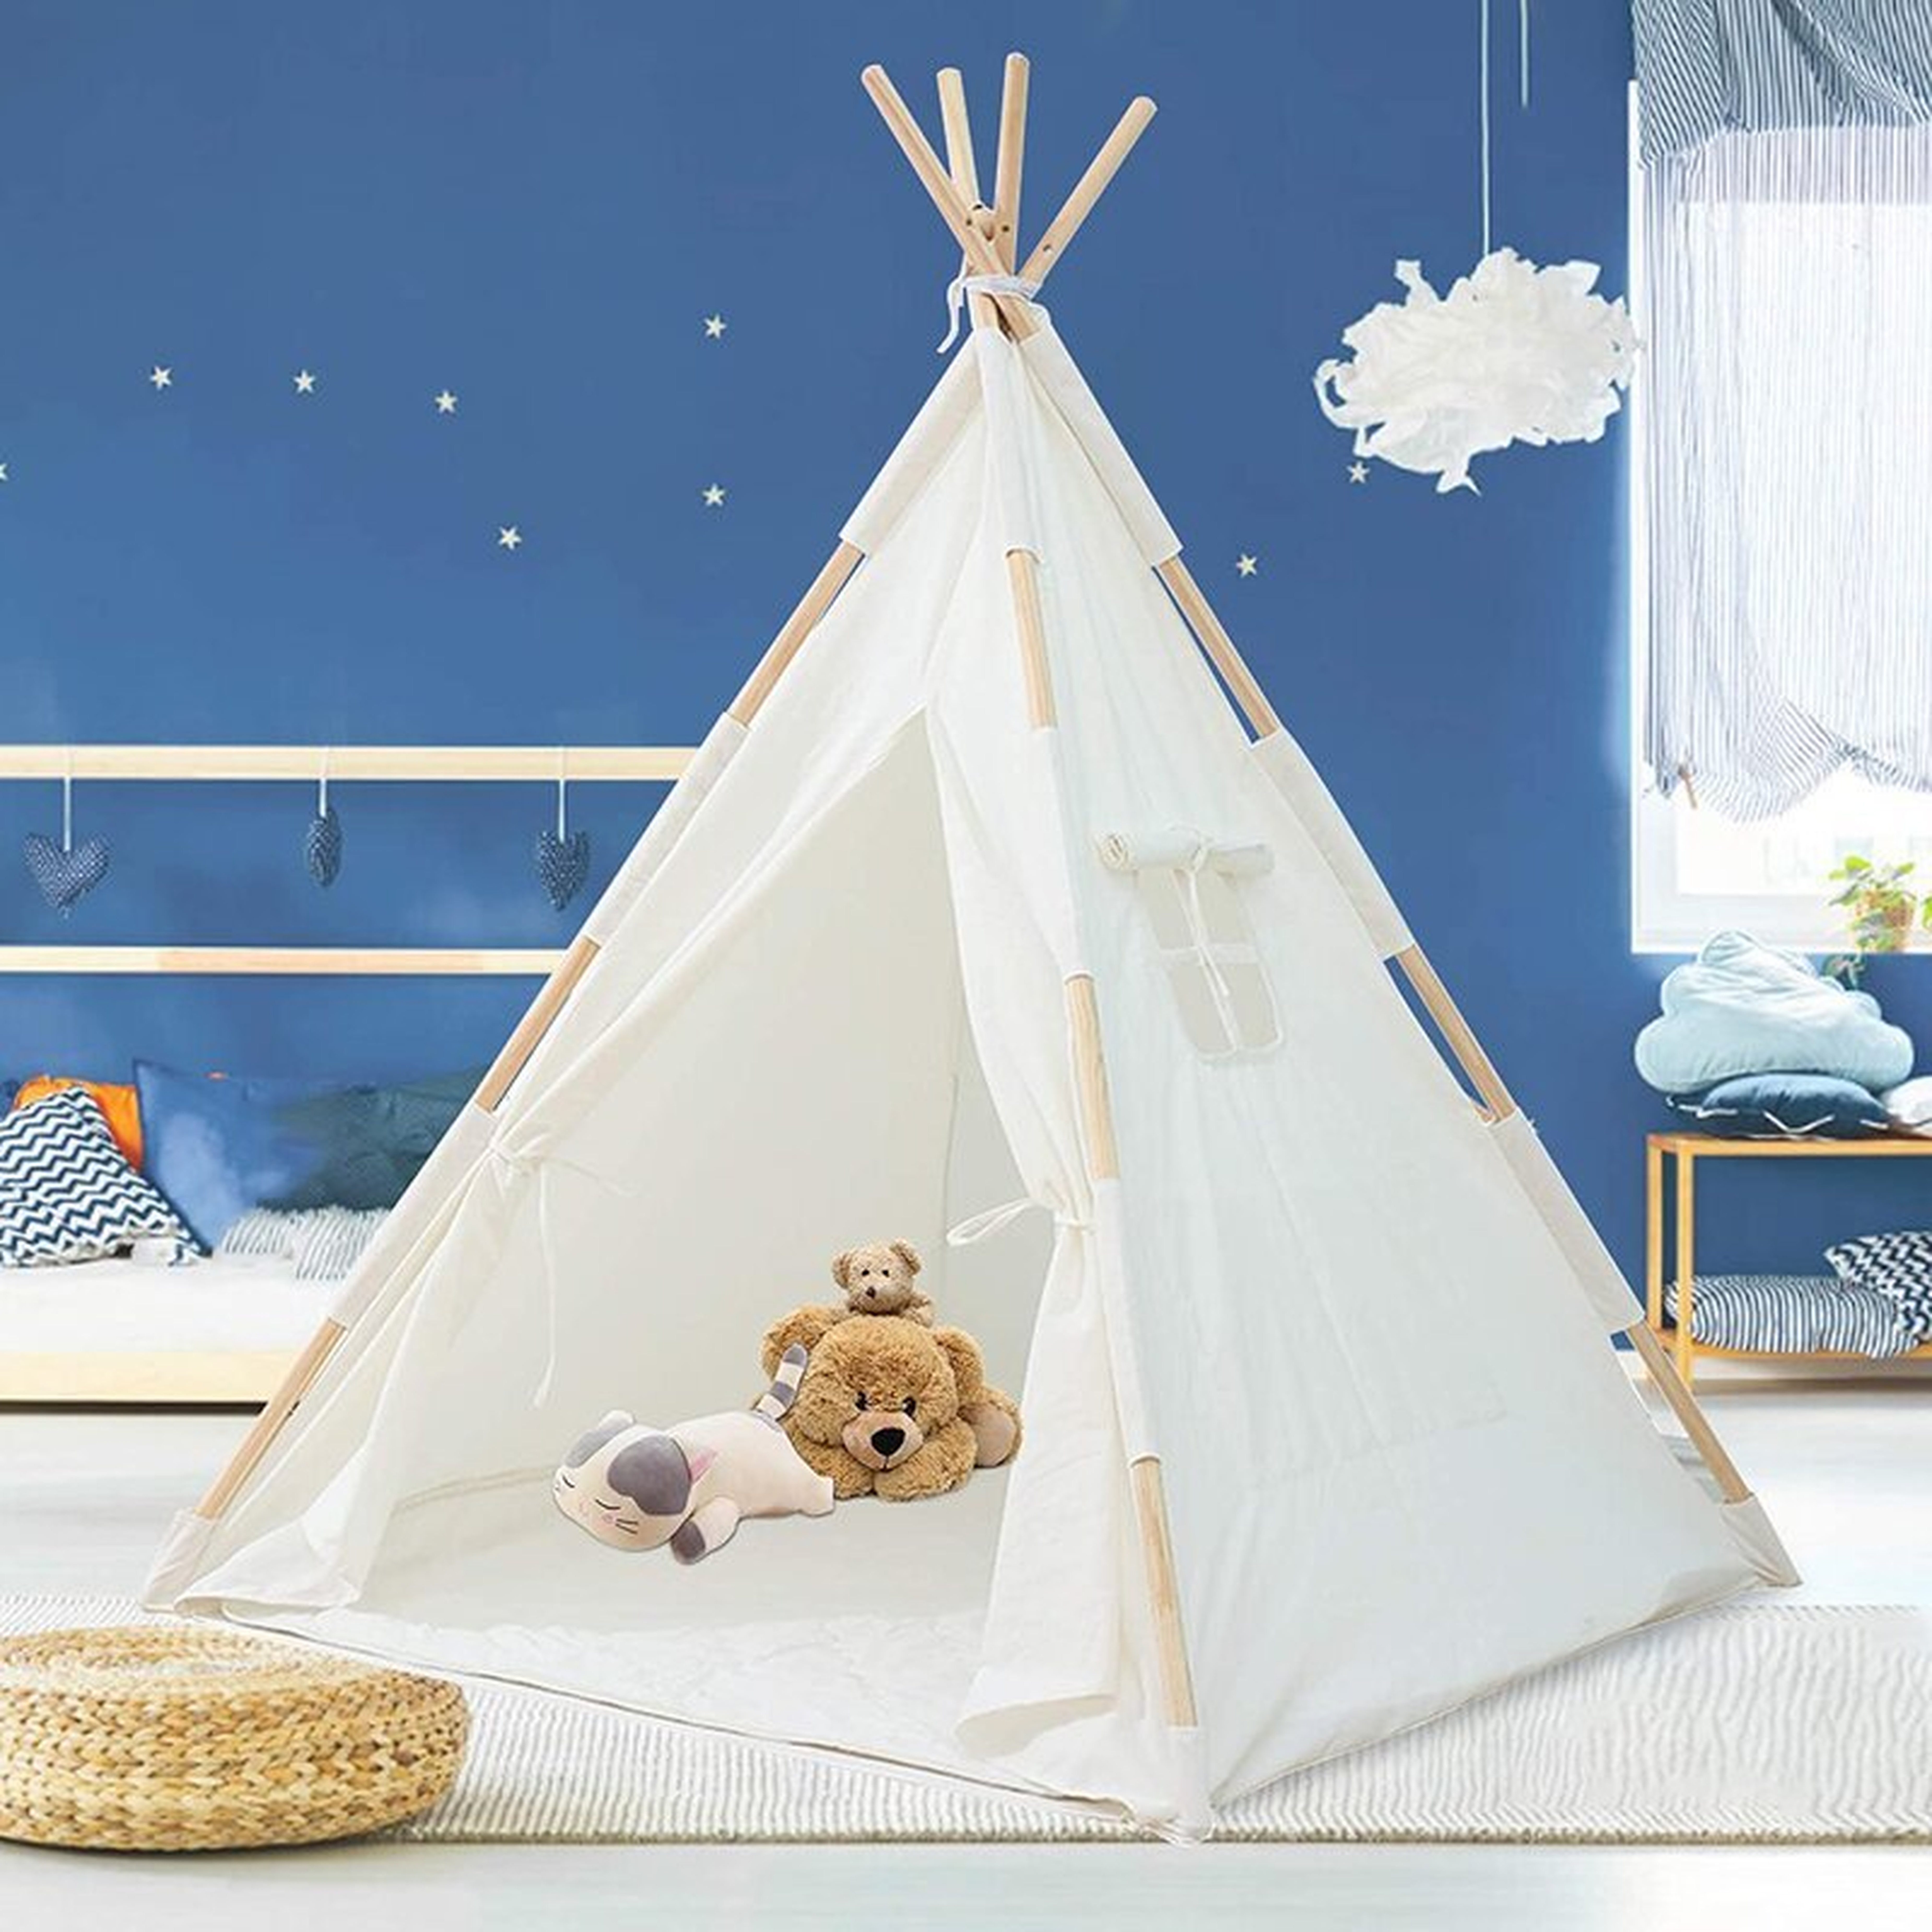 Sunvivi Indoor/Outdoor Fabric Pop-Up Triangular Play Tent with Carrying Bag - Wayfair